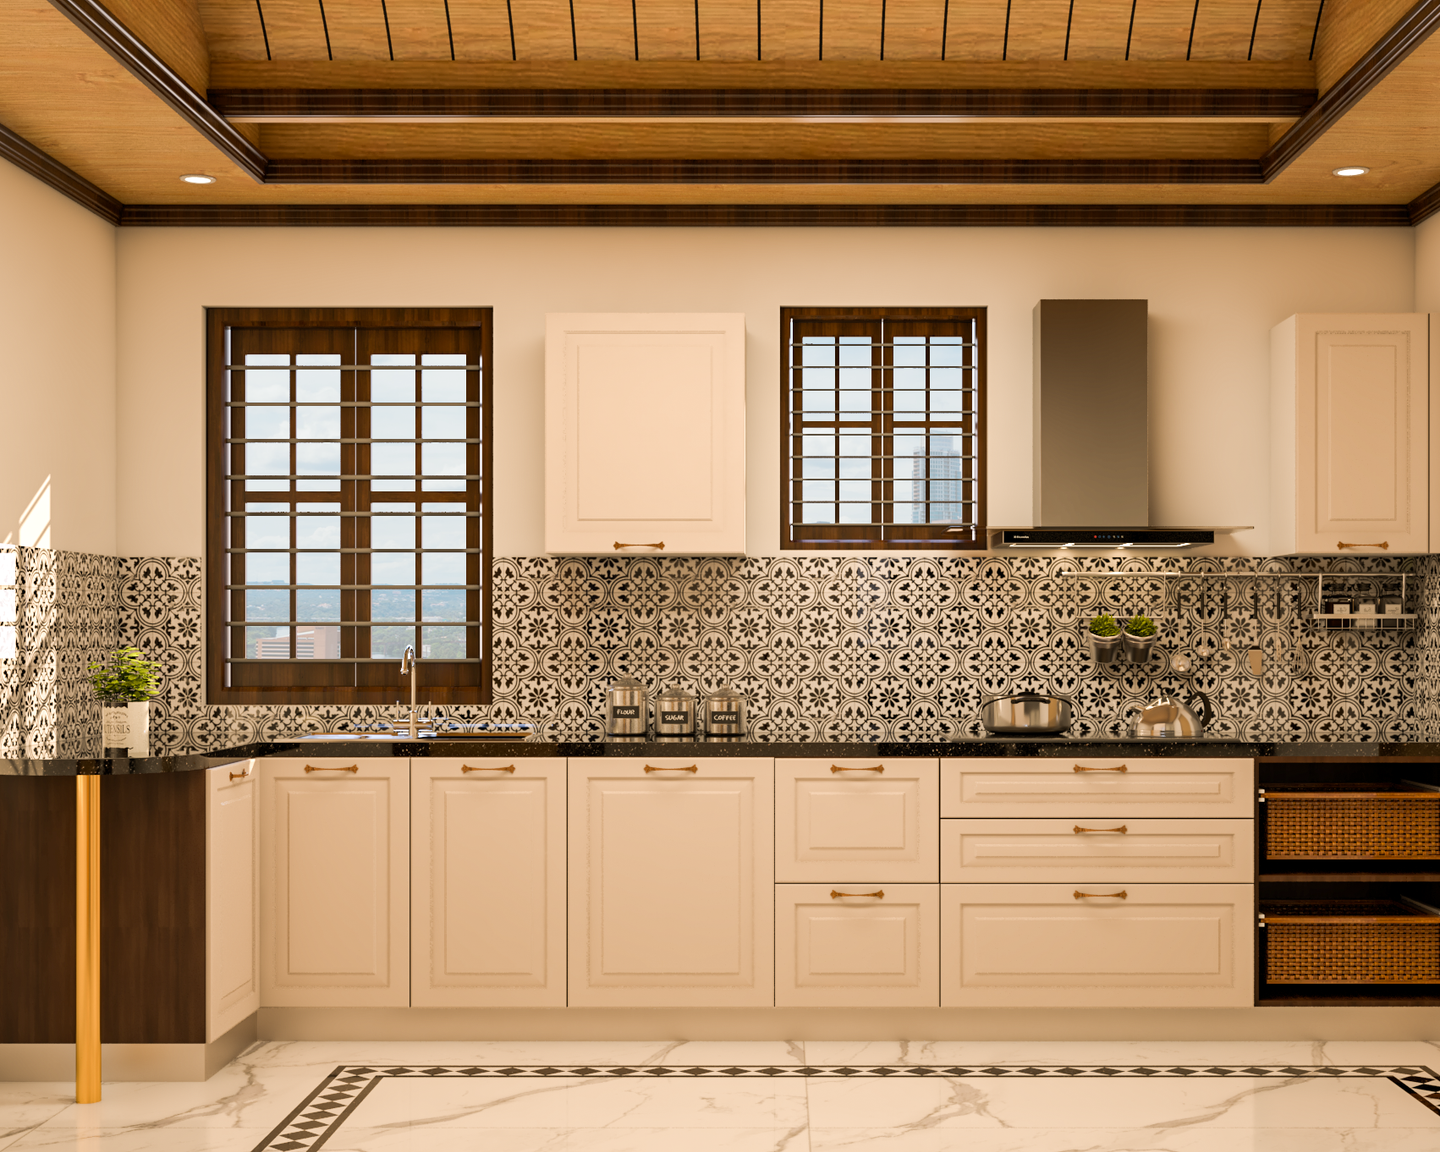 Modular Kitchen Design With White Cabinets - Livspace